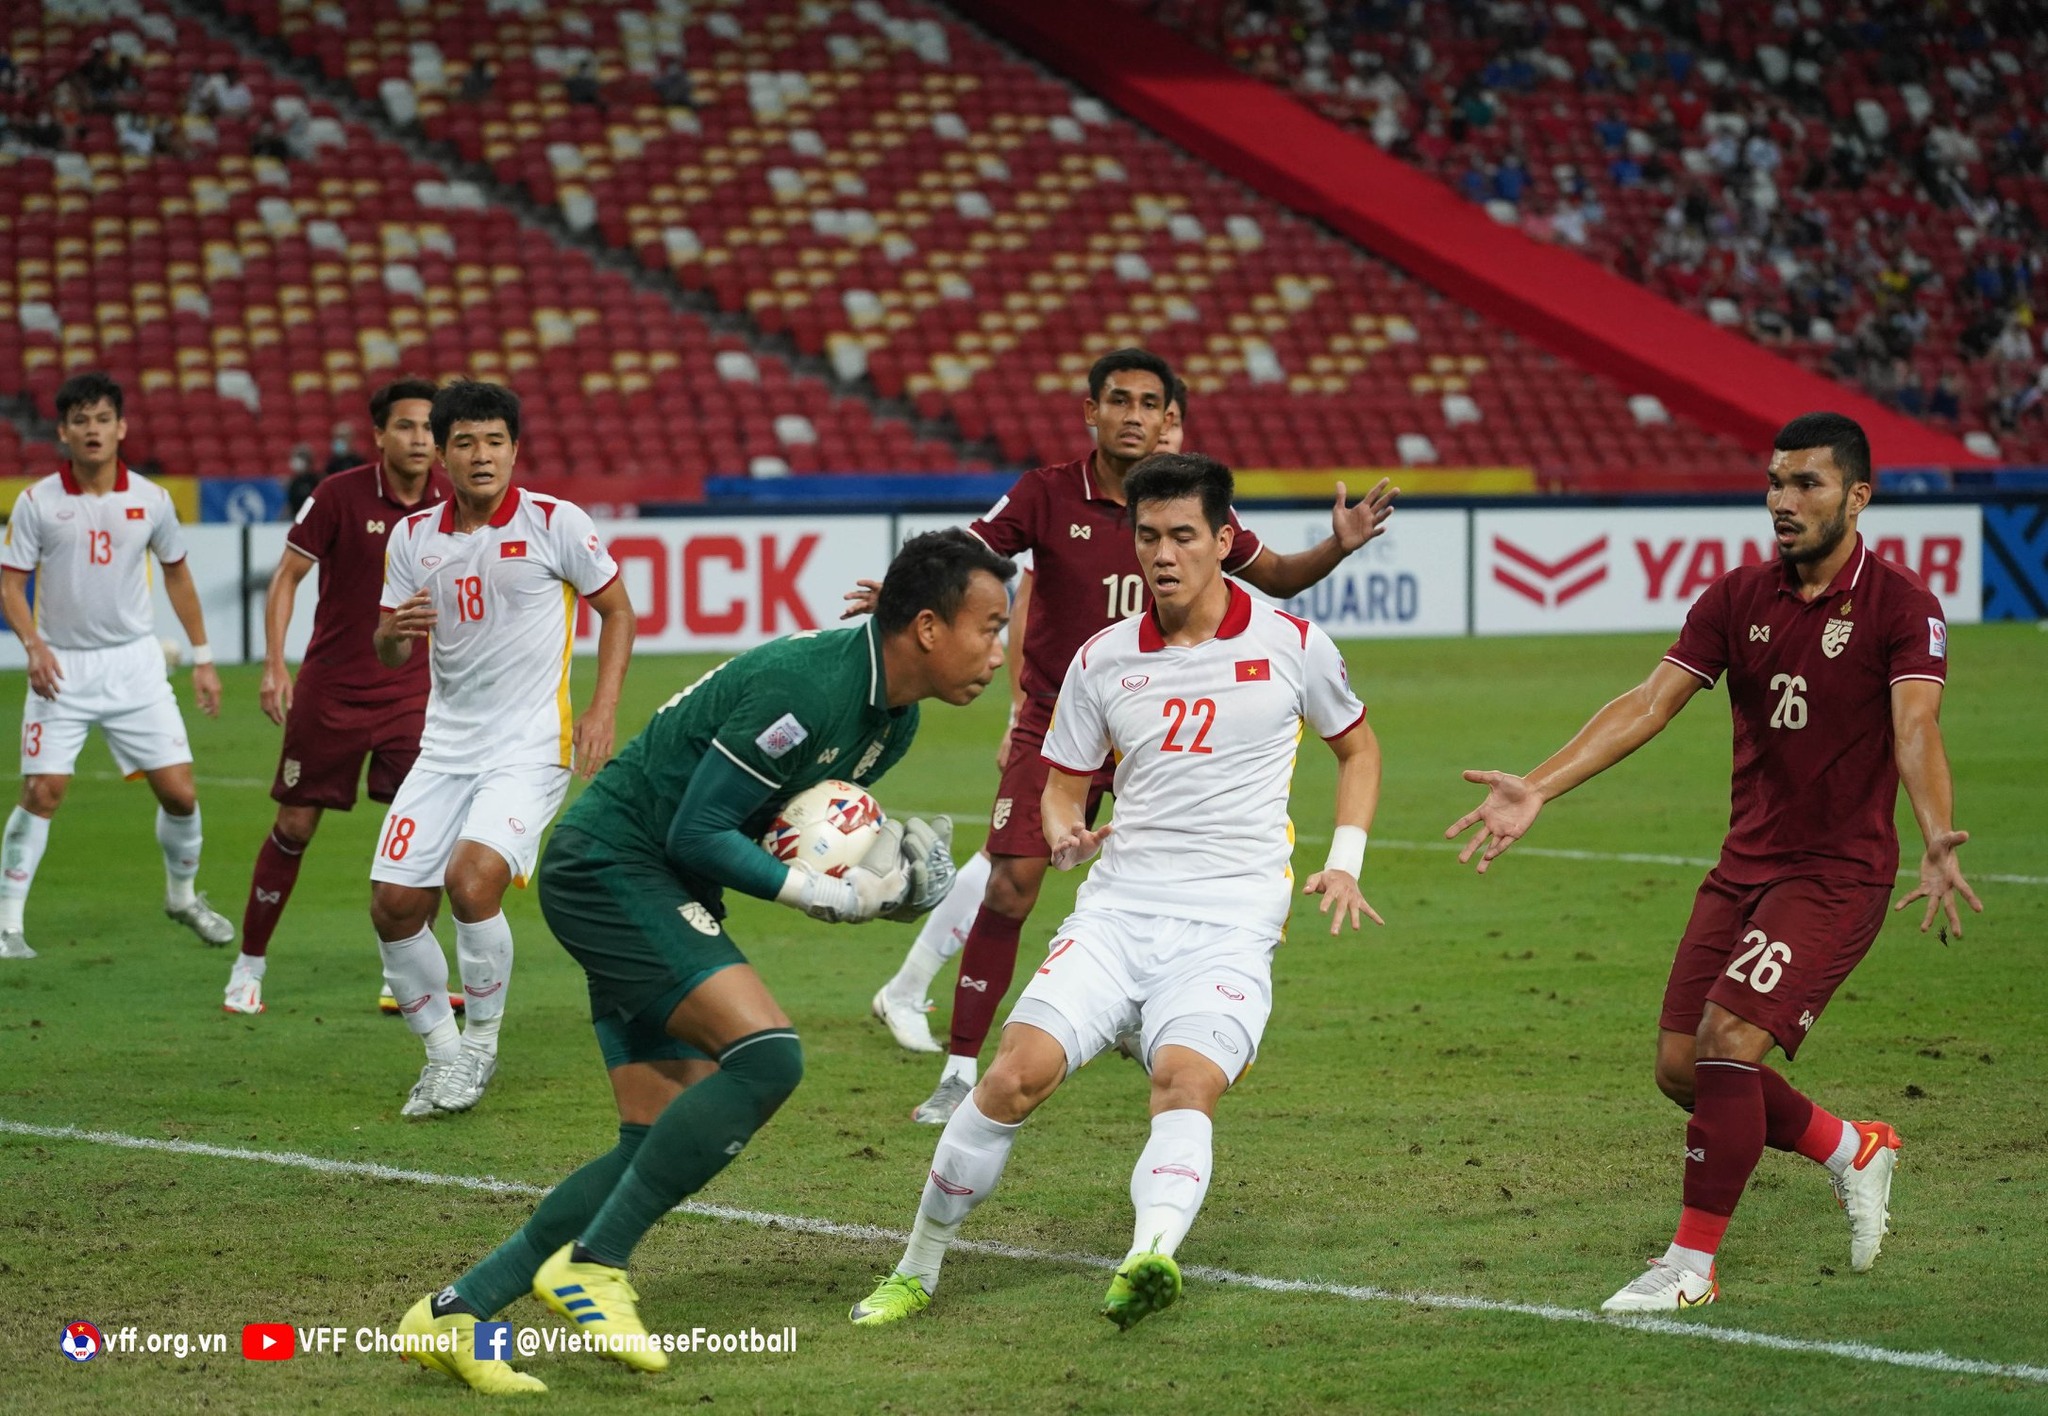 Vietnam's top striker Nguyen Tien Linh tests positive for coronavirus prior to Australia game